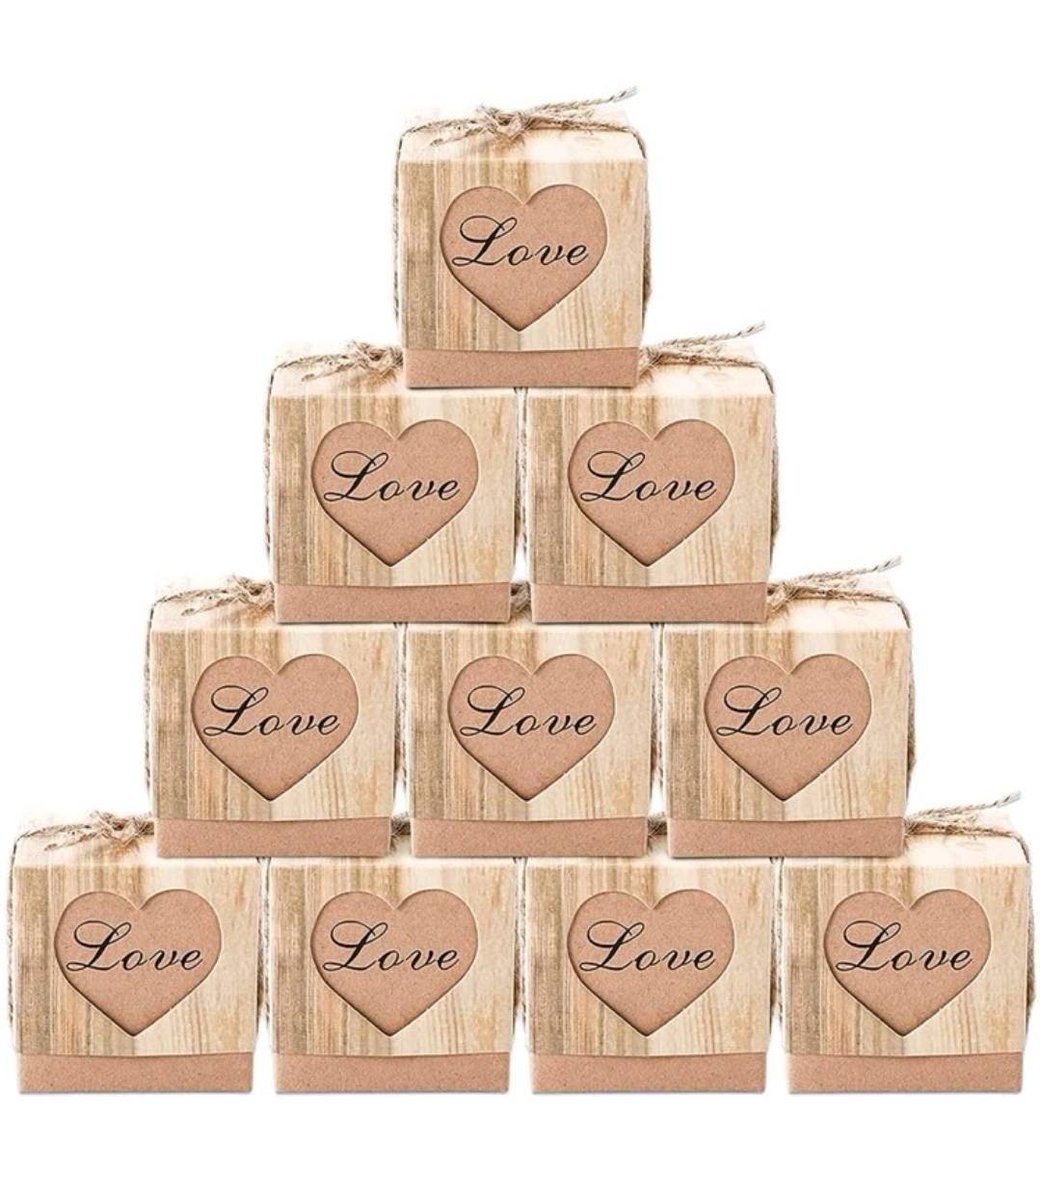 #etsy shop: Gift Box (30) - Love

#etsyukseller #weddingfavours #weddingfavourboxes #weddingsweetbox #lovegiftbox #giftbox #smallgiftbox #quirkycreationsni etsy.me/41QWj3s